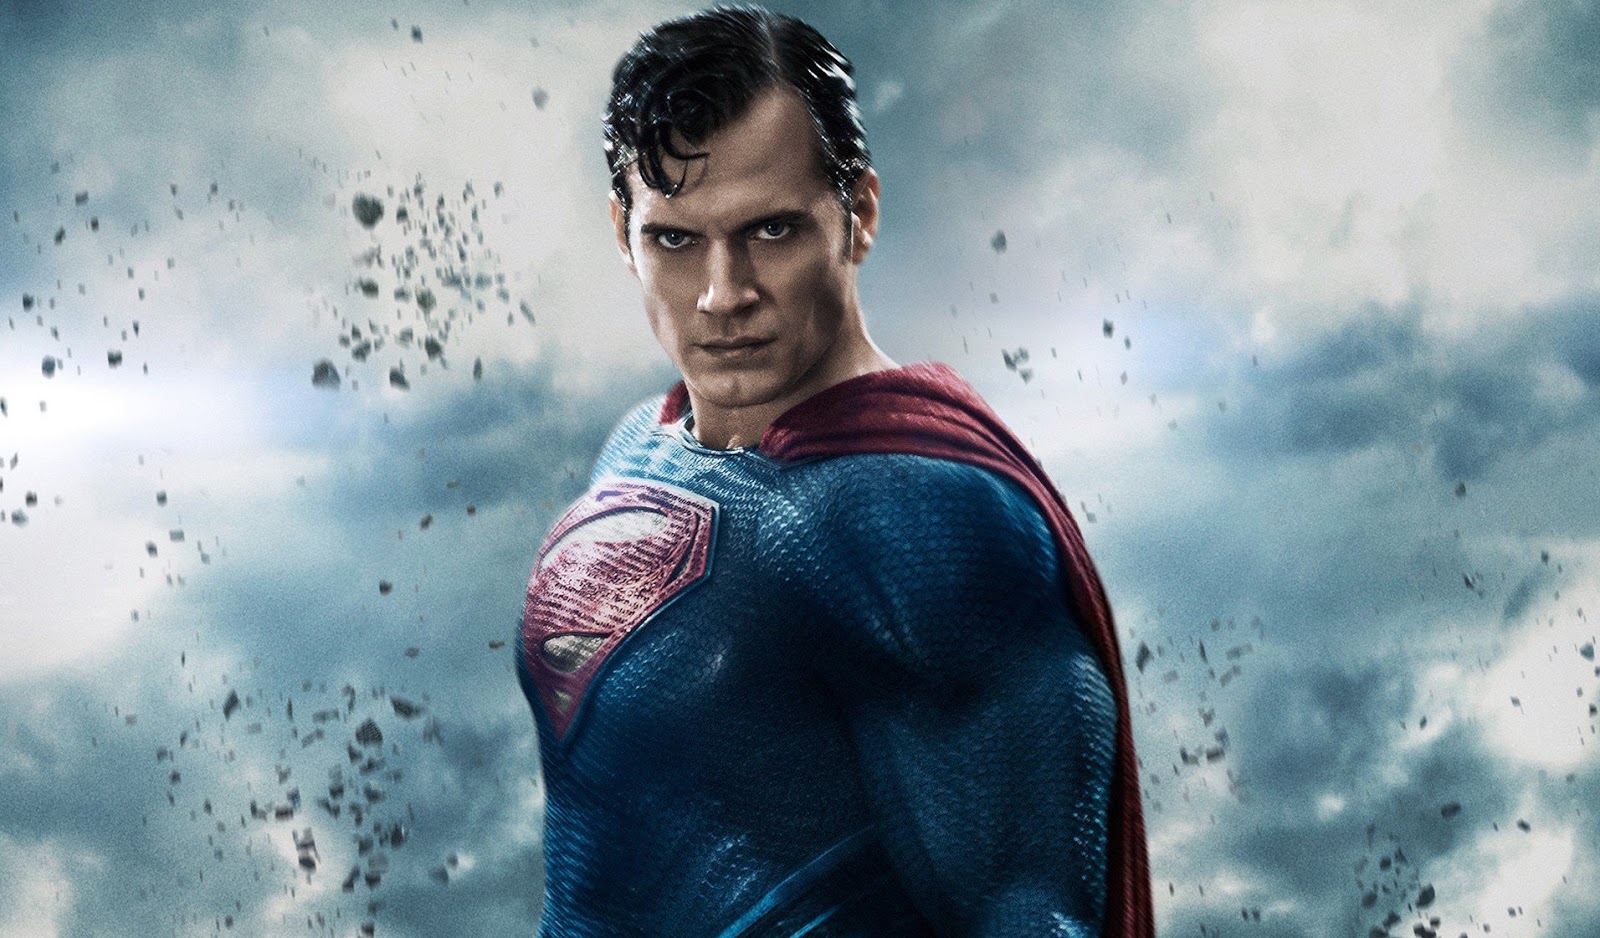 Henry Cavill veste uniforme inédito do Superman em imagem; veja!